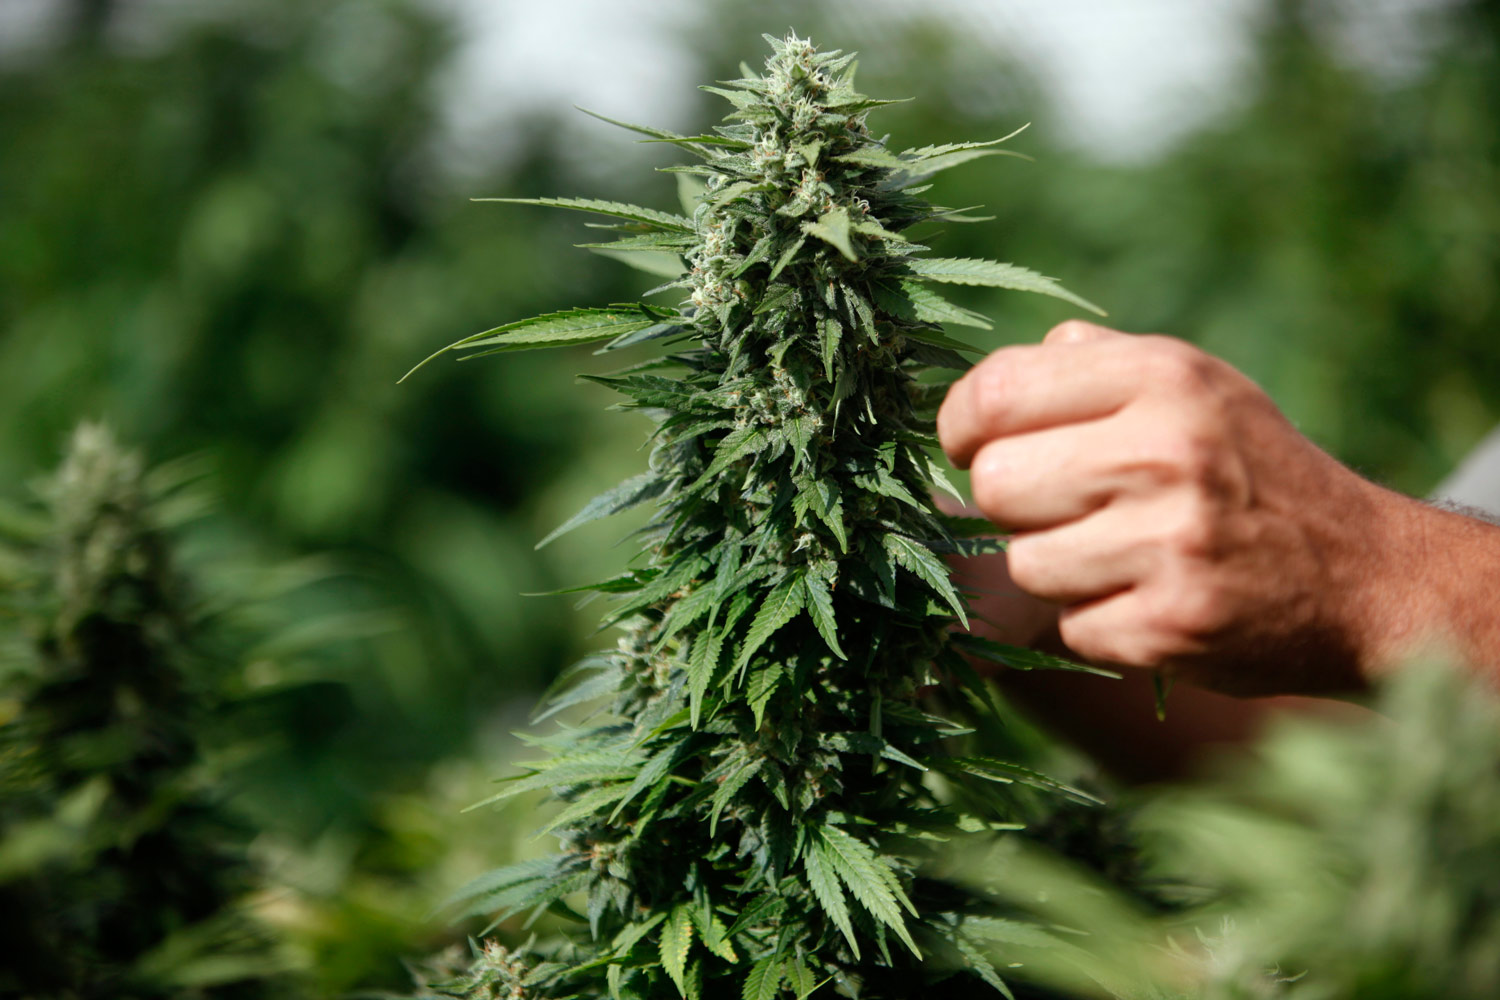 Multimillion-dollar marijuana operation uncovered in Metuchen